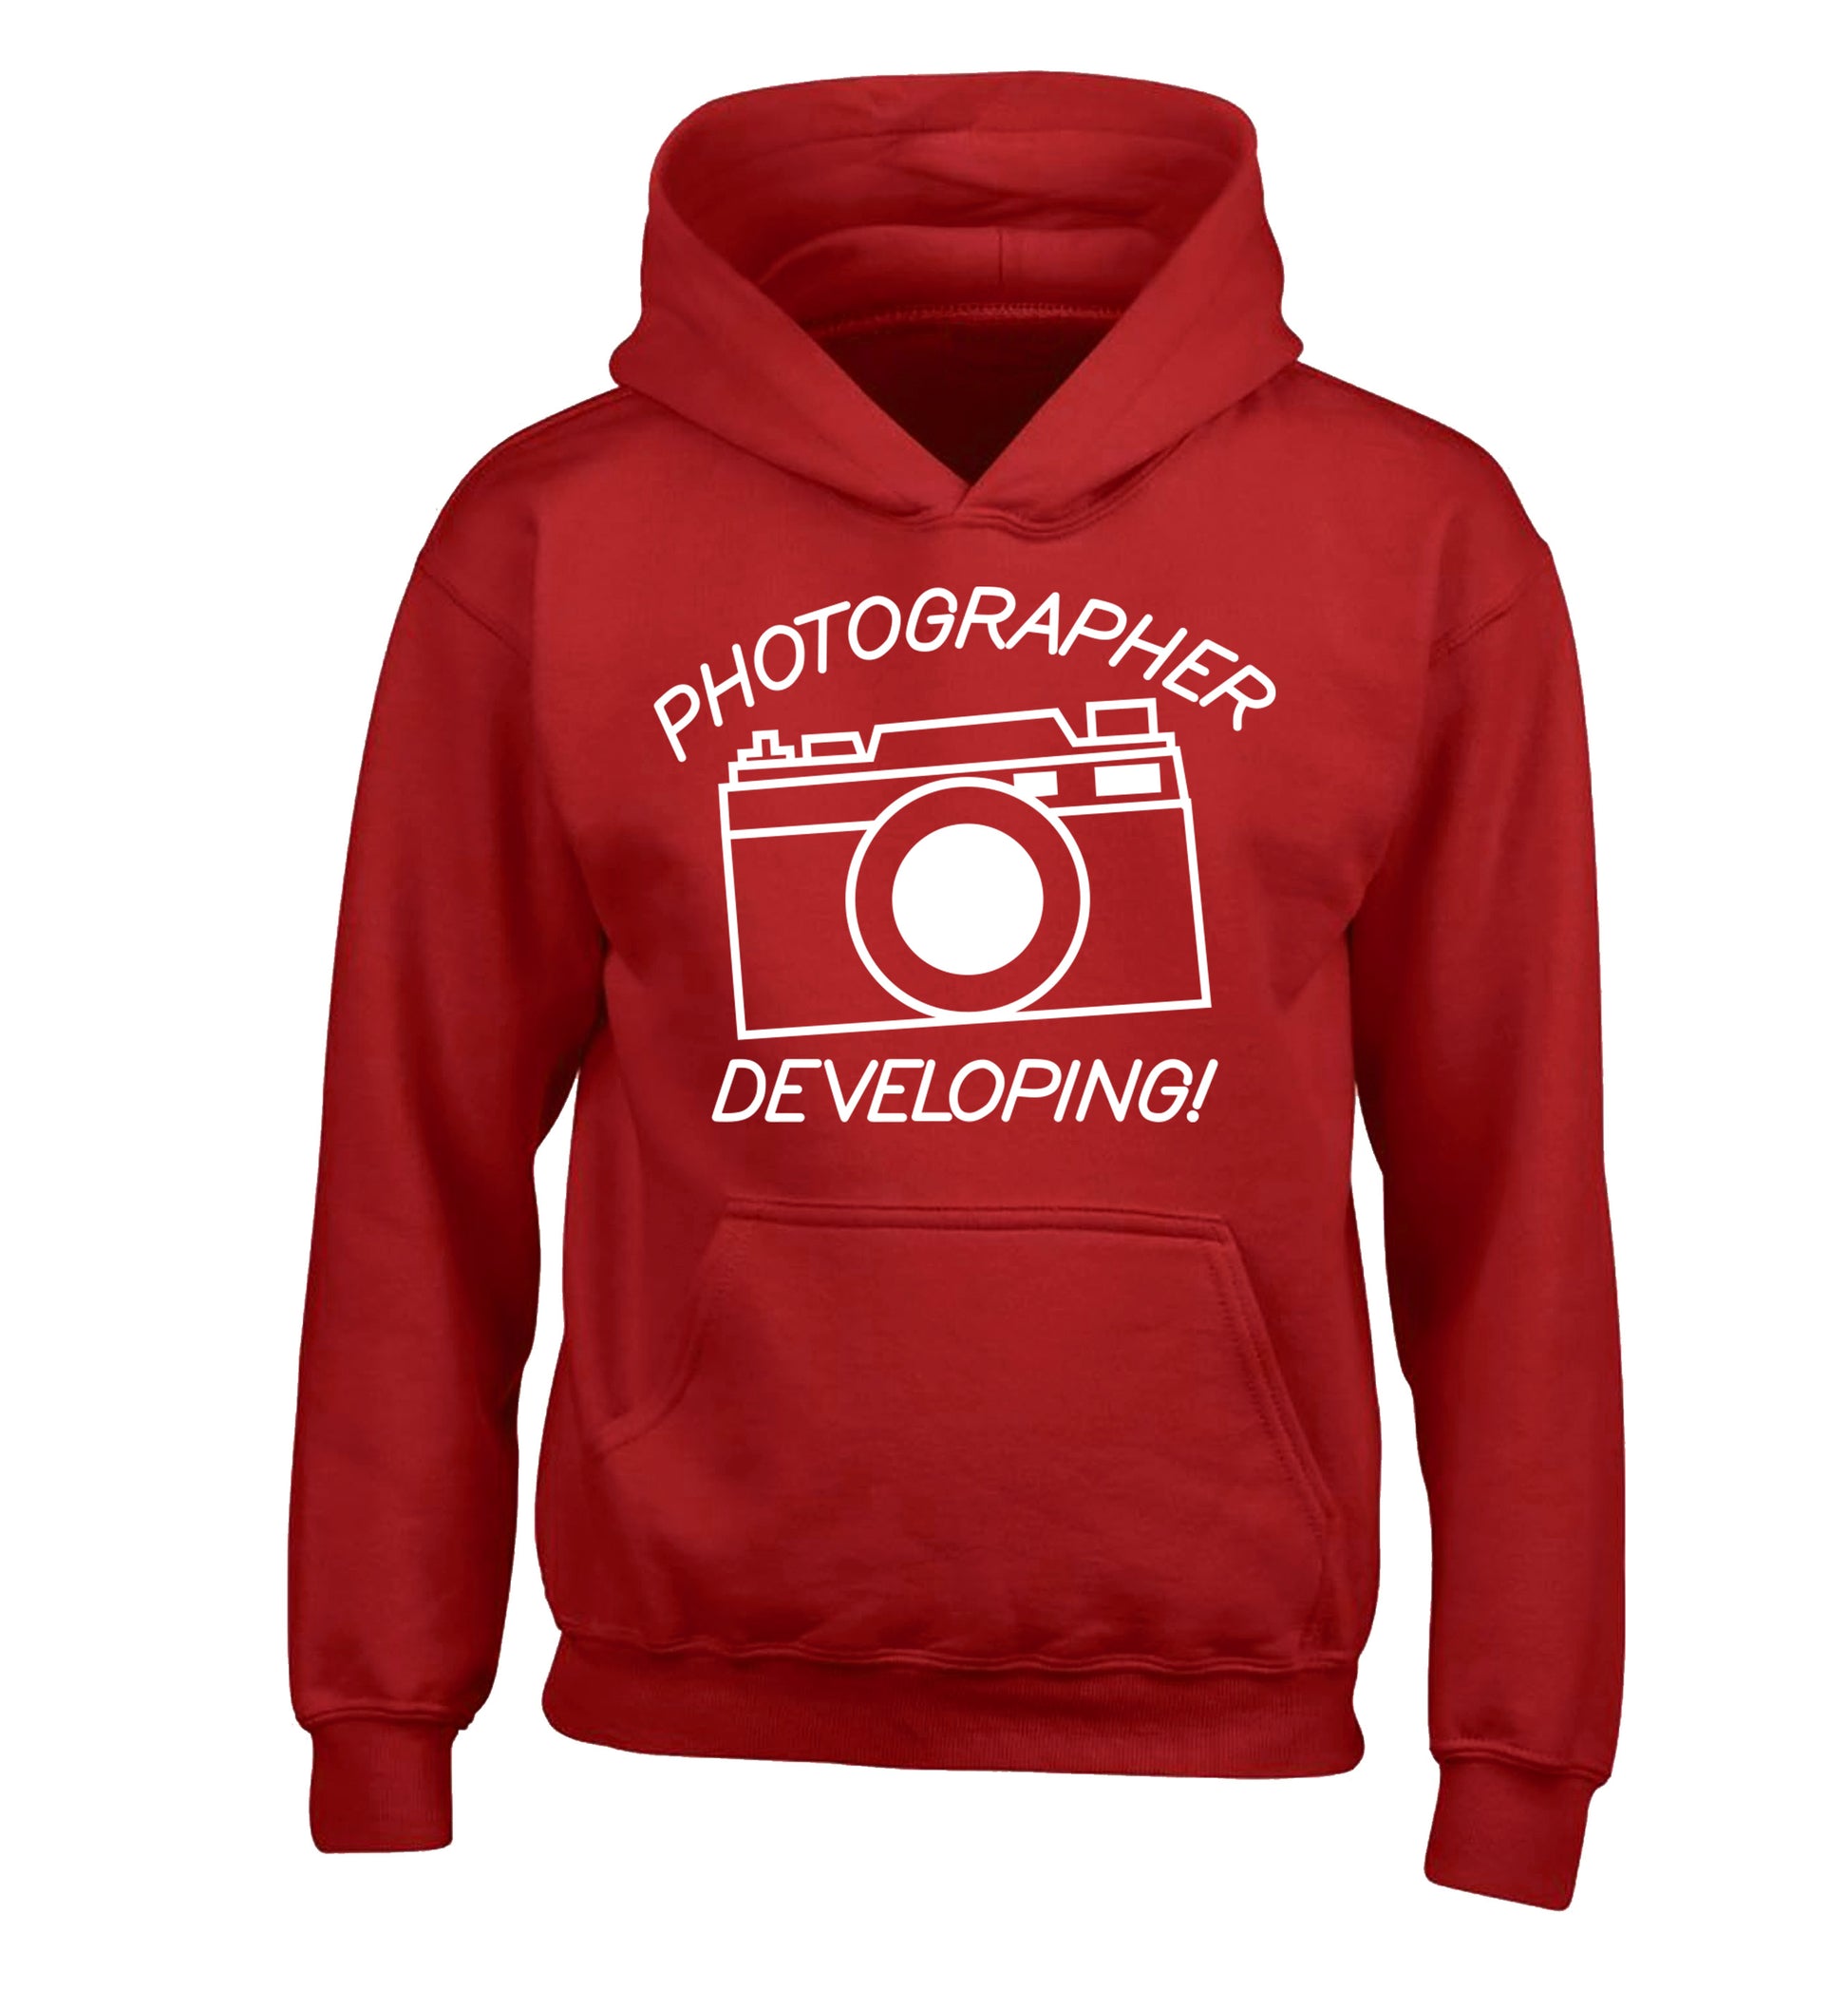 Photographer Developing  children's red hoodie 12-13 Years